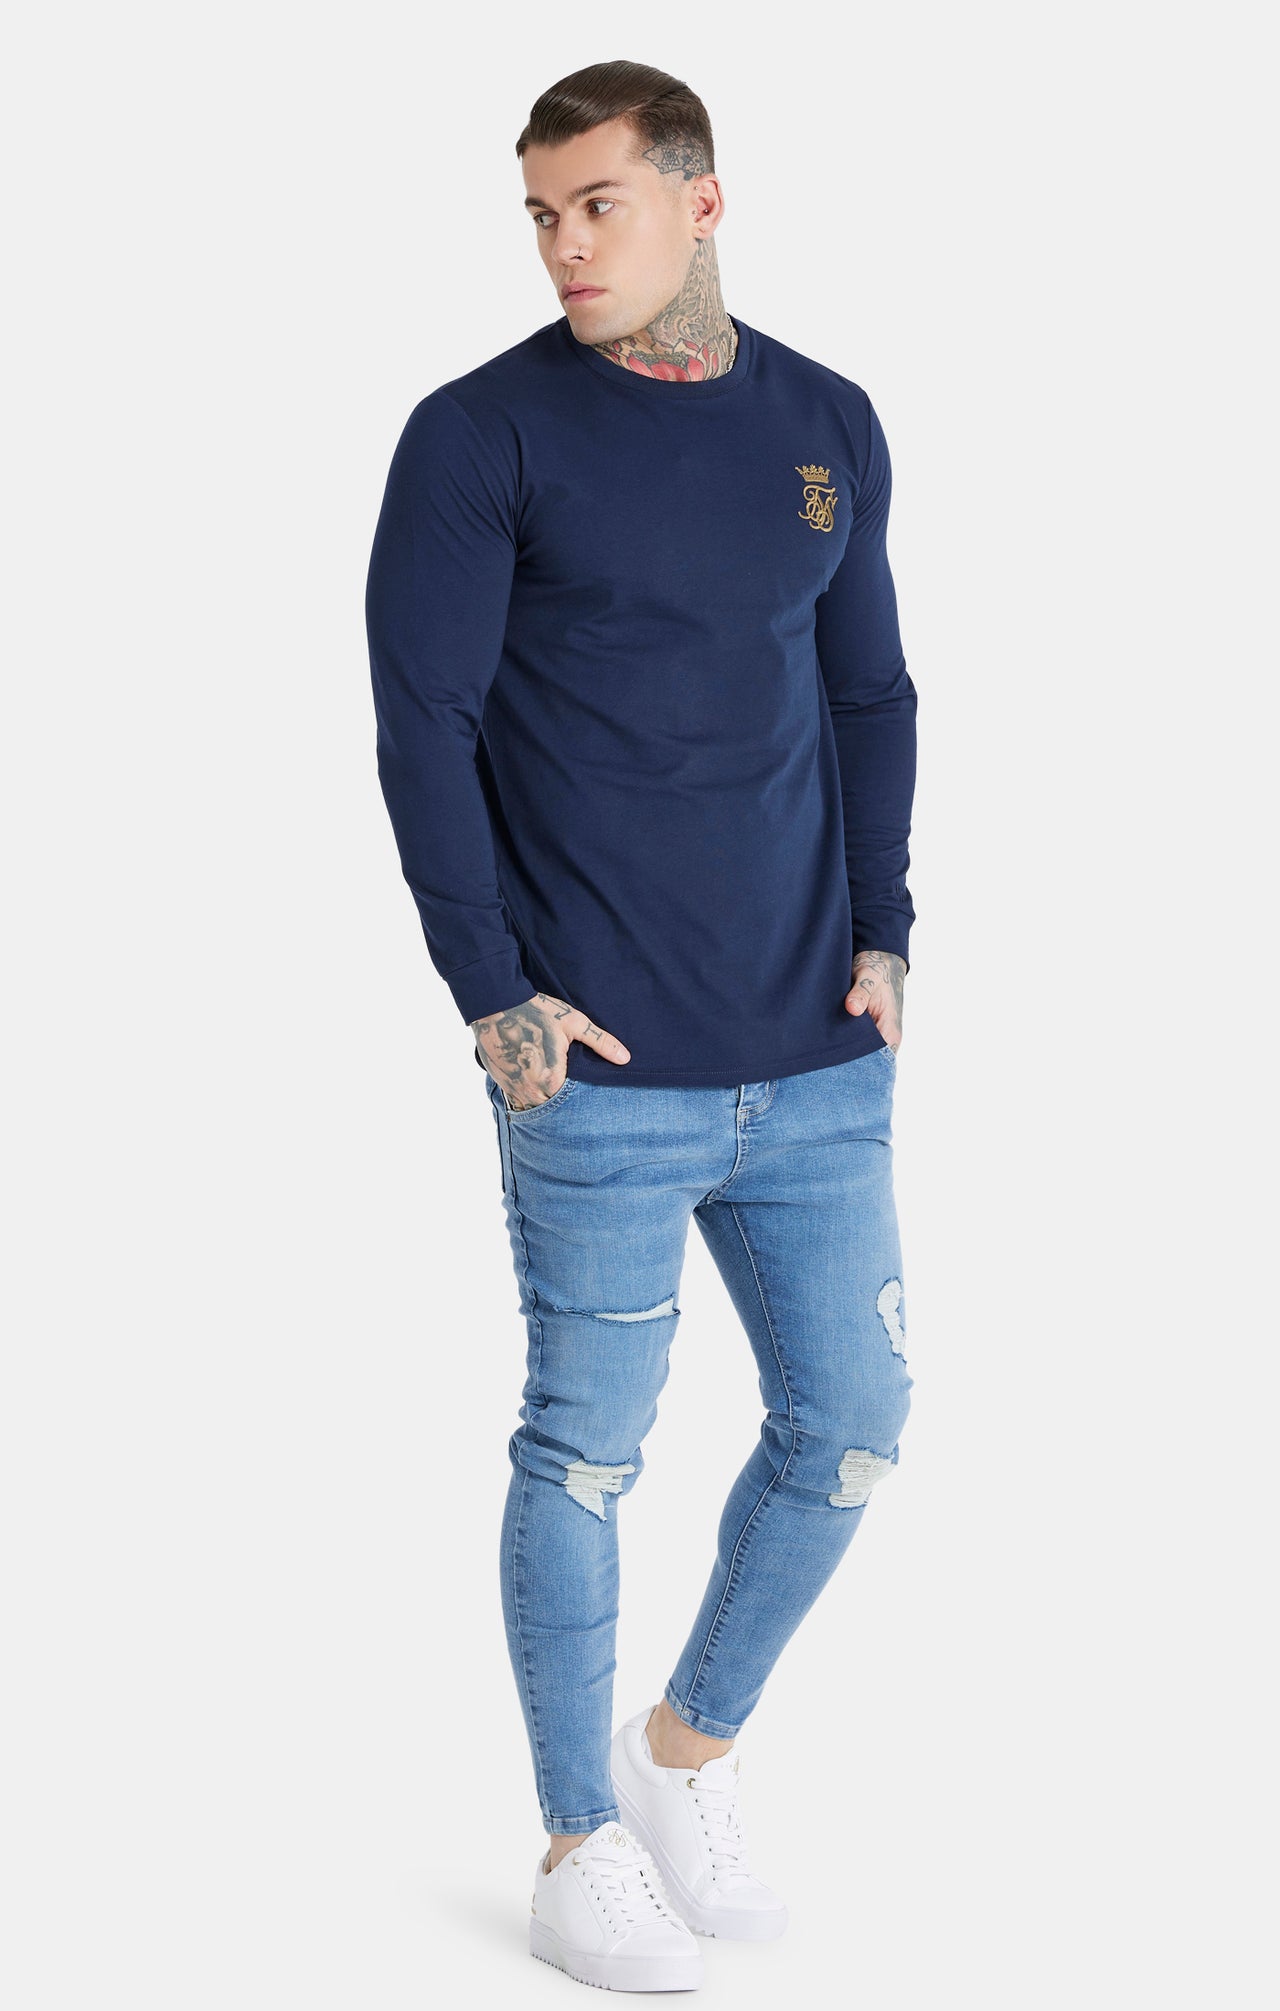 Messi x SikSilk Navy Long Sleeve T-Shirt (2)